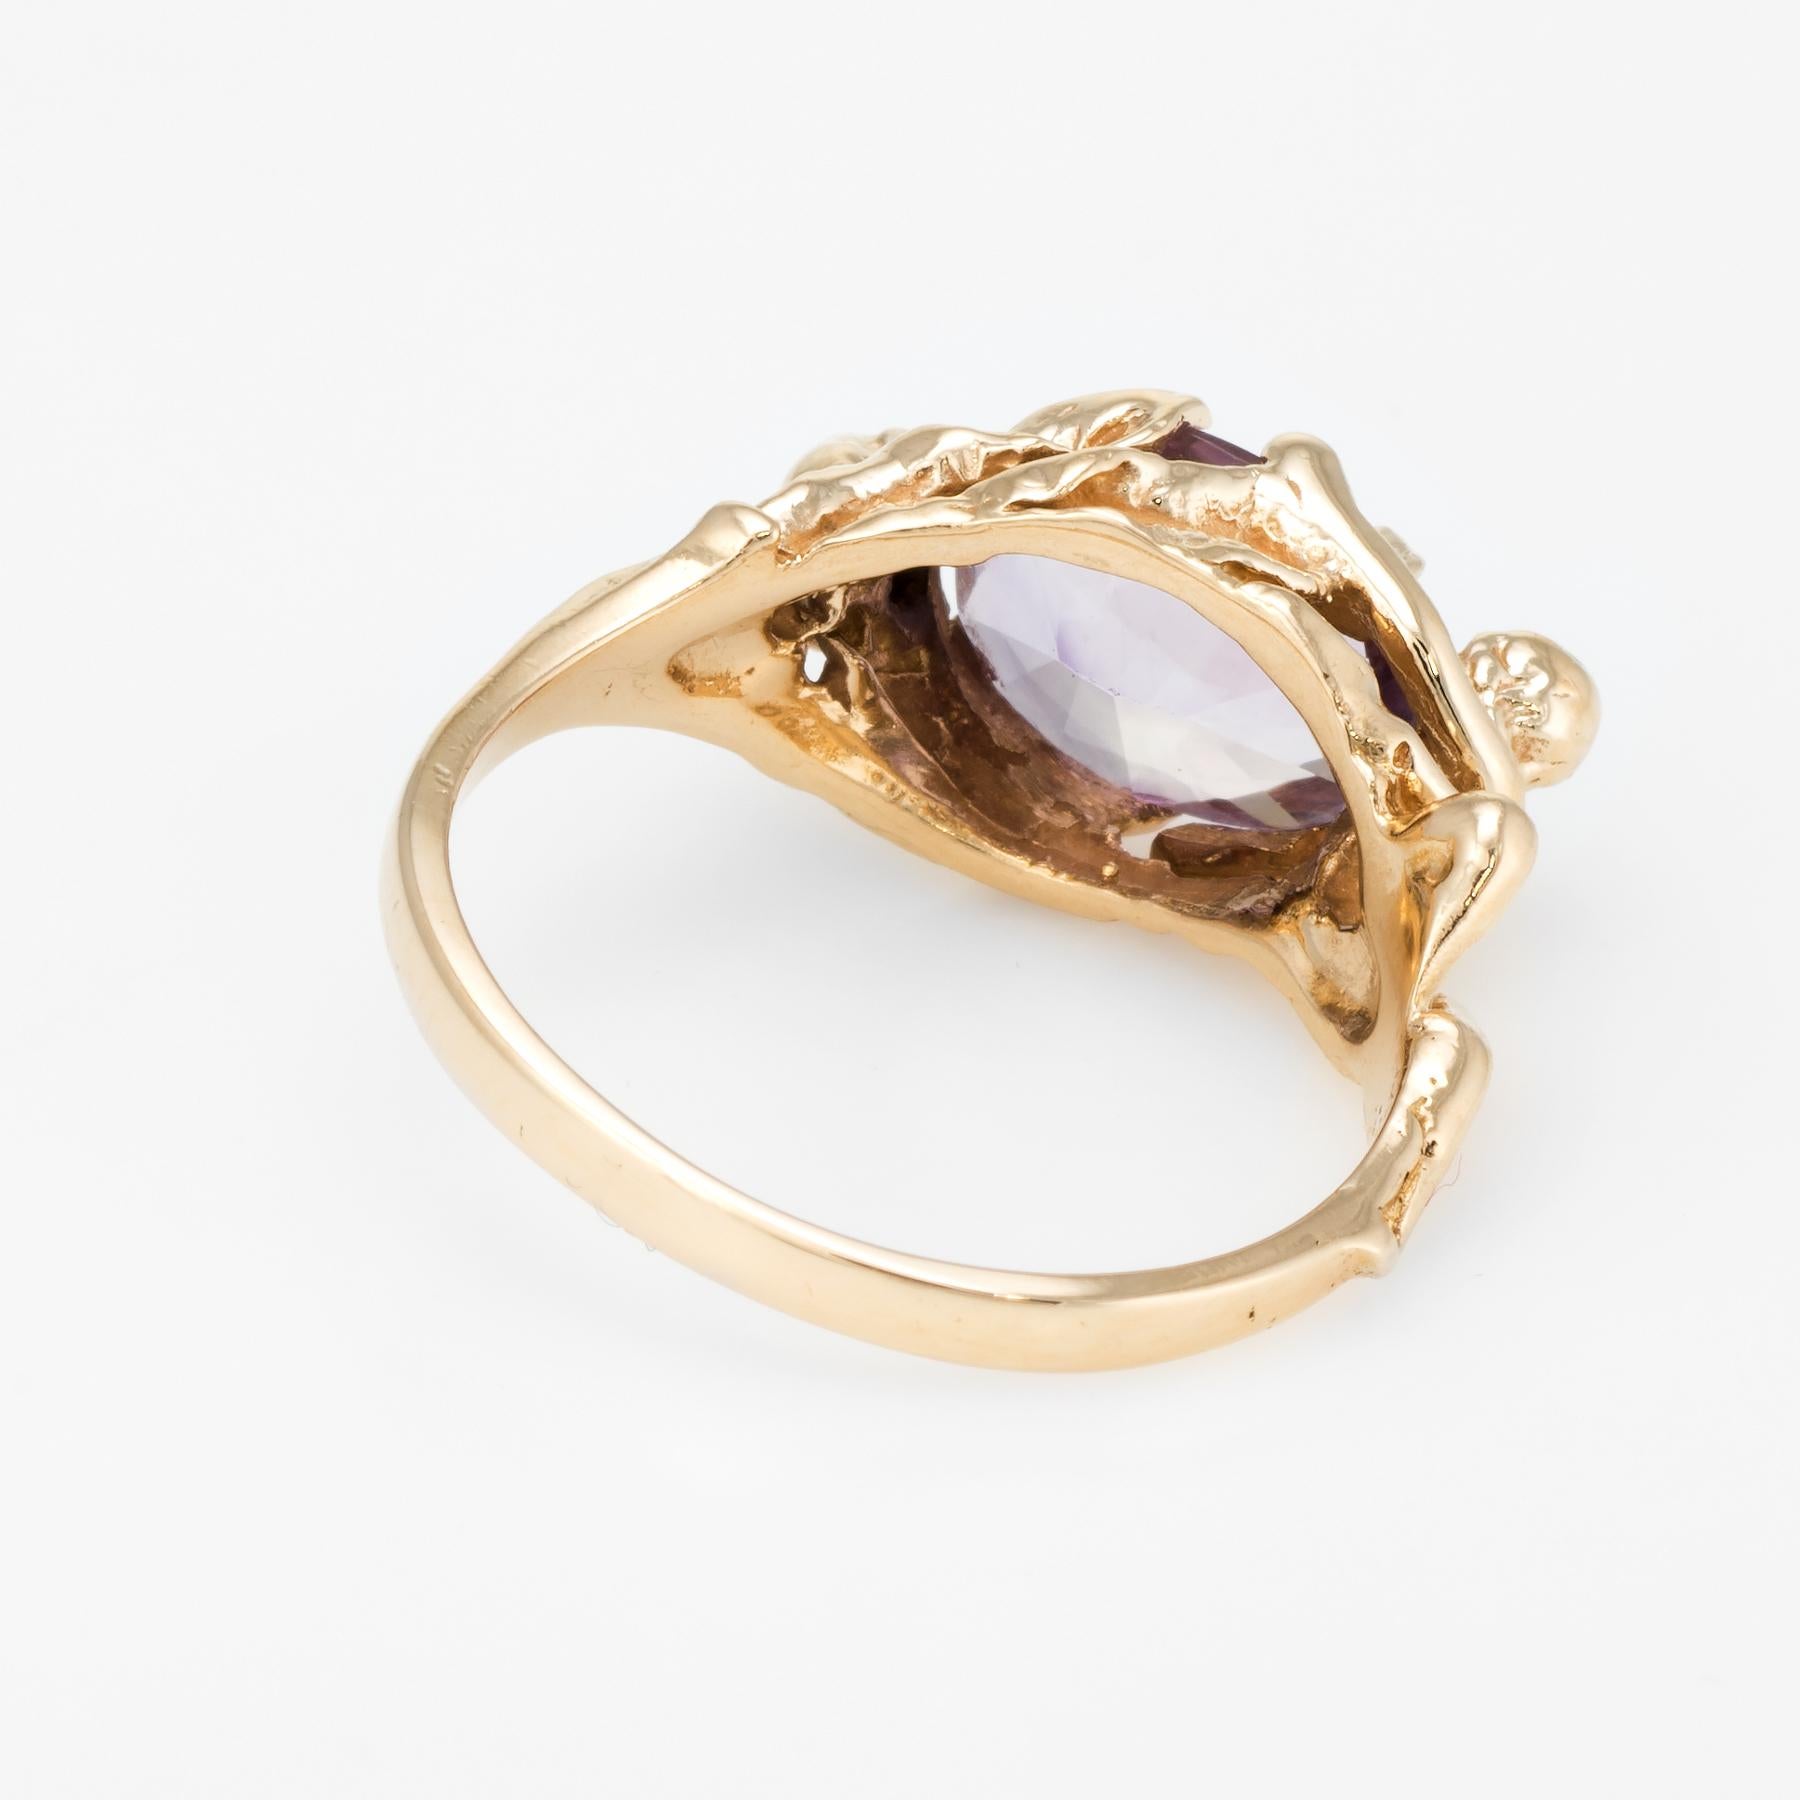 Nude Figural Ring Vintage Amethyst Ruby Flower 14 Karat Gold Estate Jewelry 1